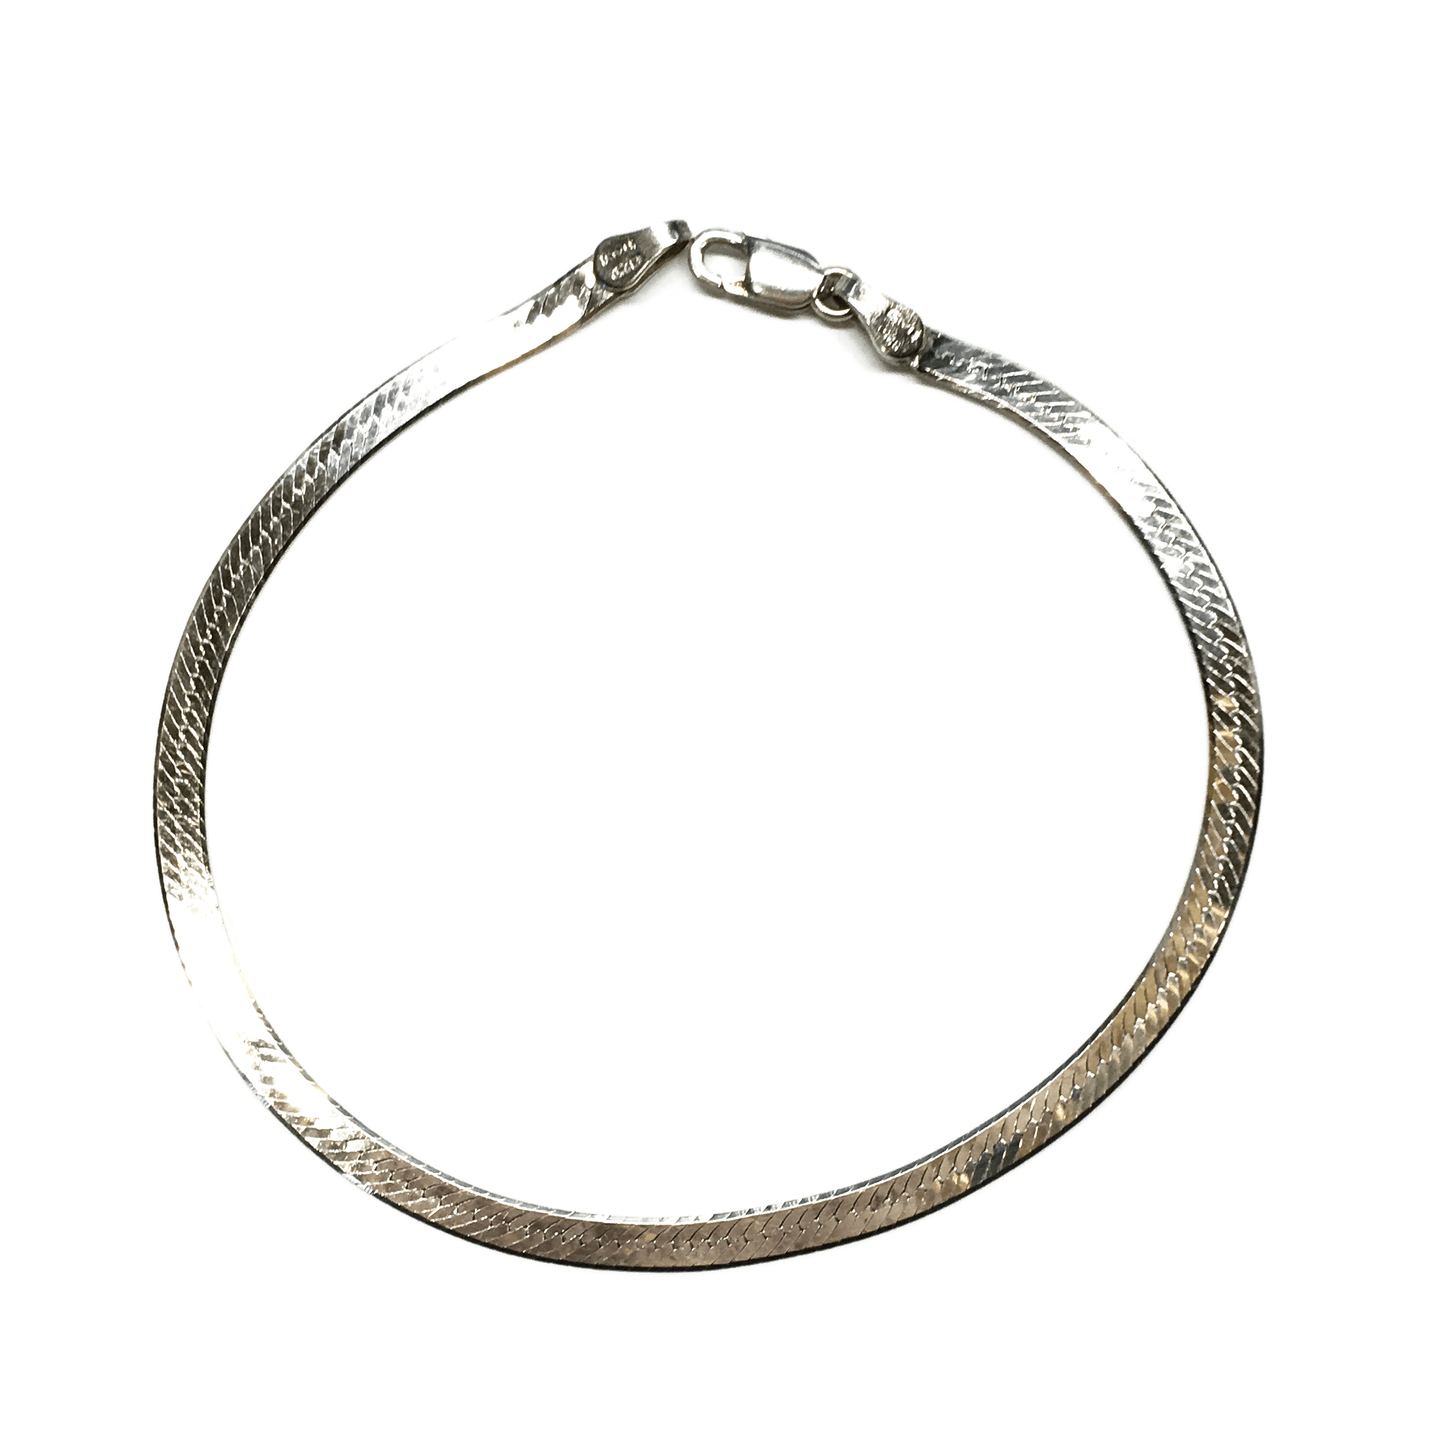 Bracelet | Womens 7 7/8in Sterling Silver Shimmery Herringbone Chain Bracelet - Discount Imperfect Jewelry